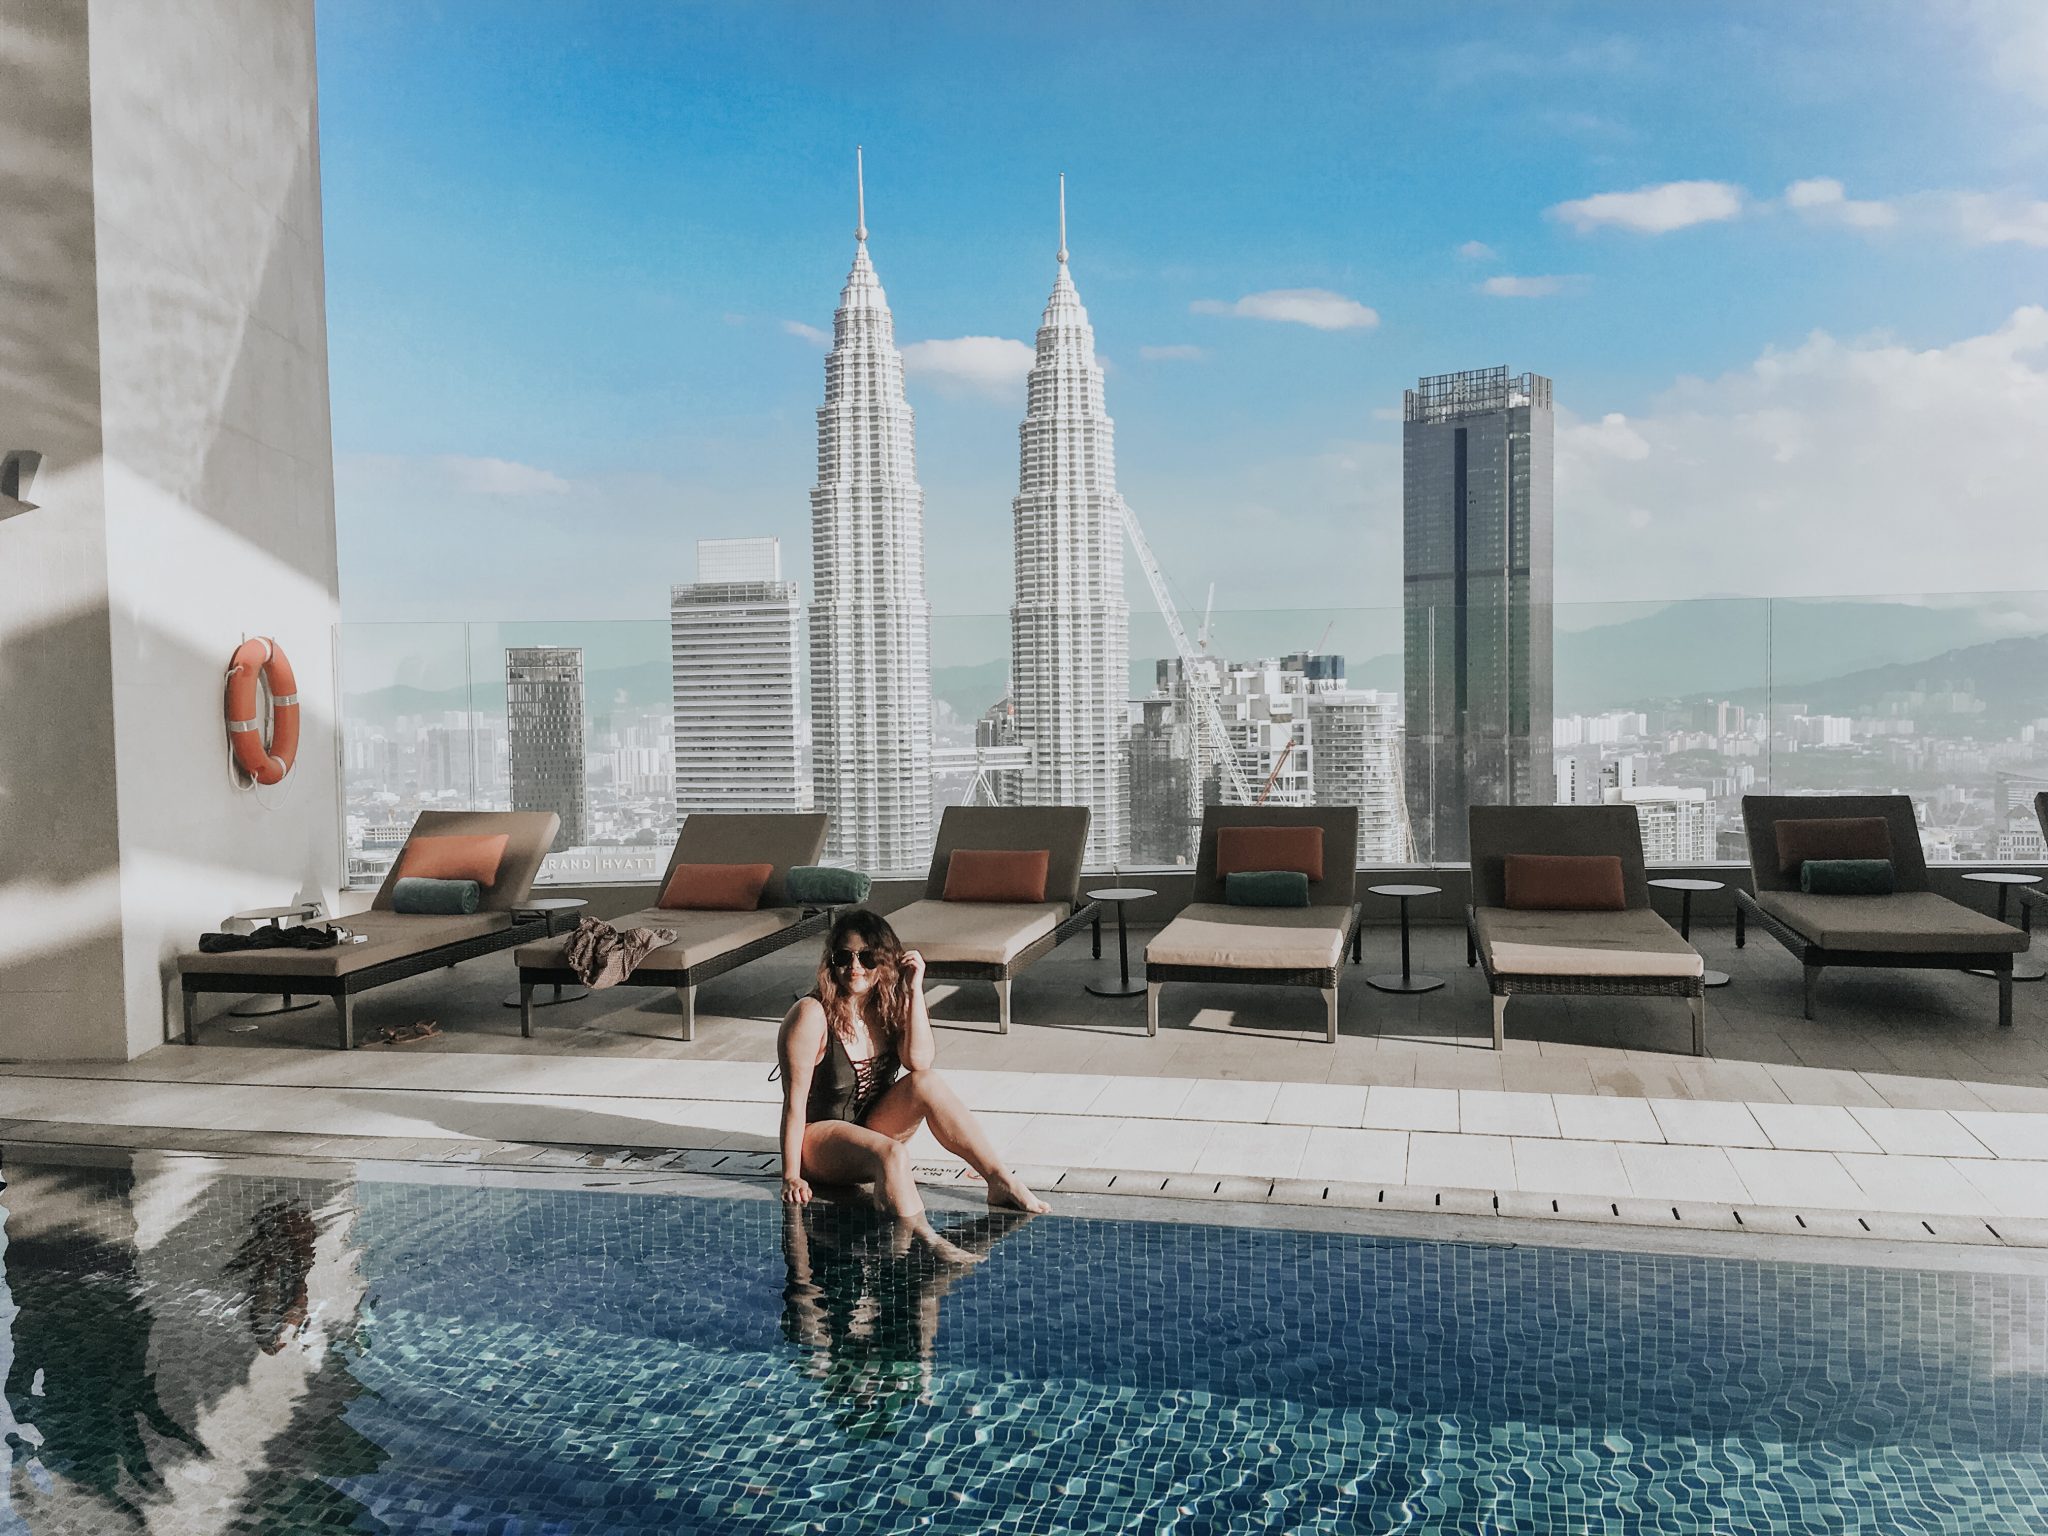 Banyan Tree Hotel Kuala Lumpur Infinity Pool Petronas tower